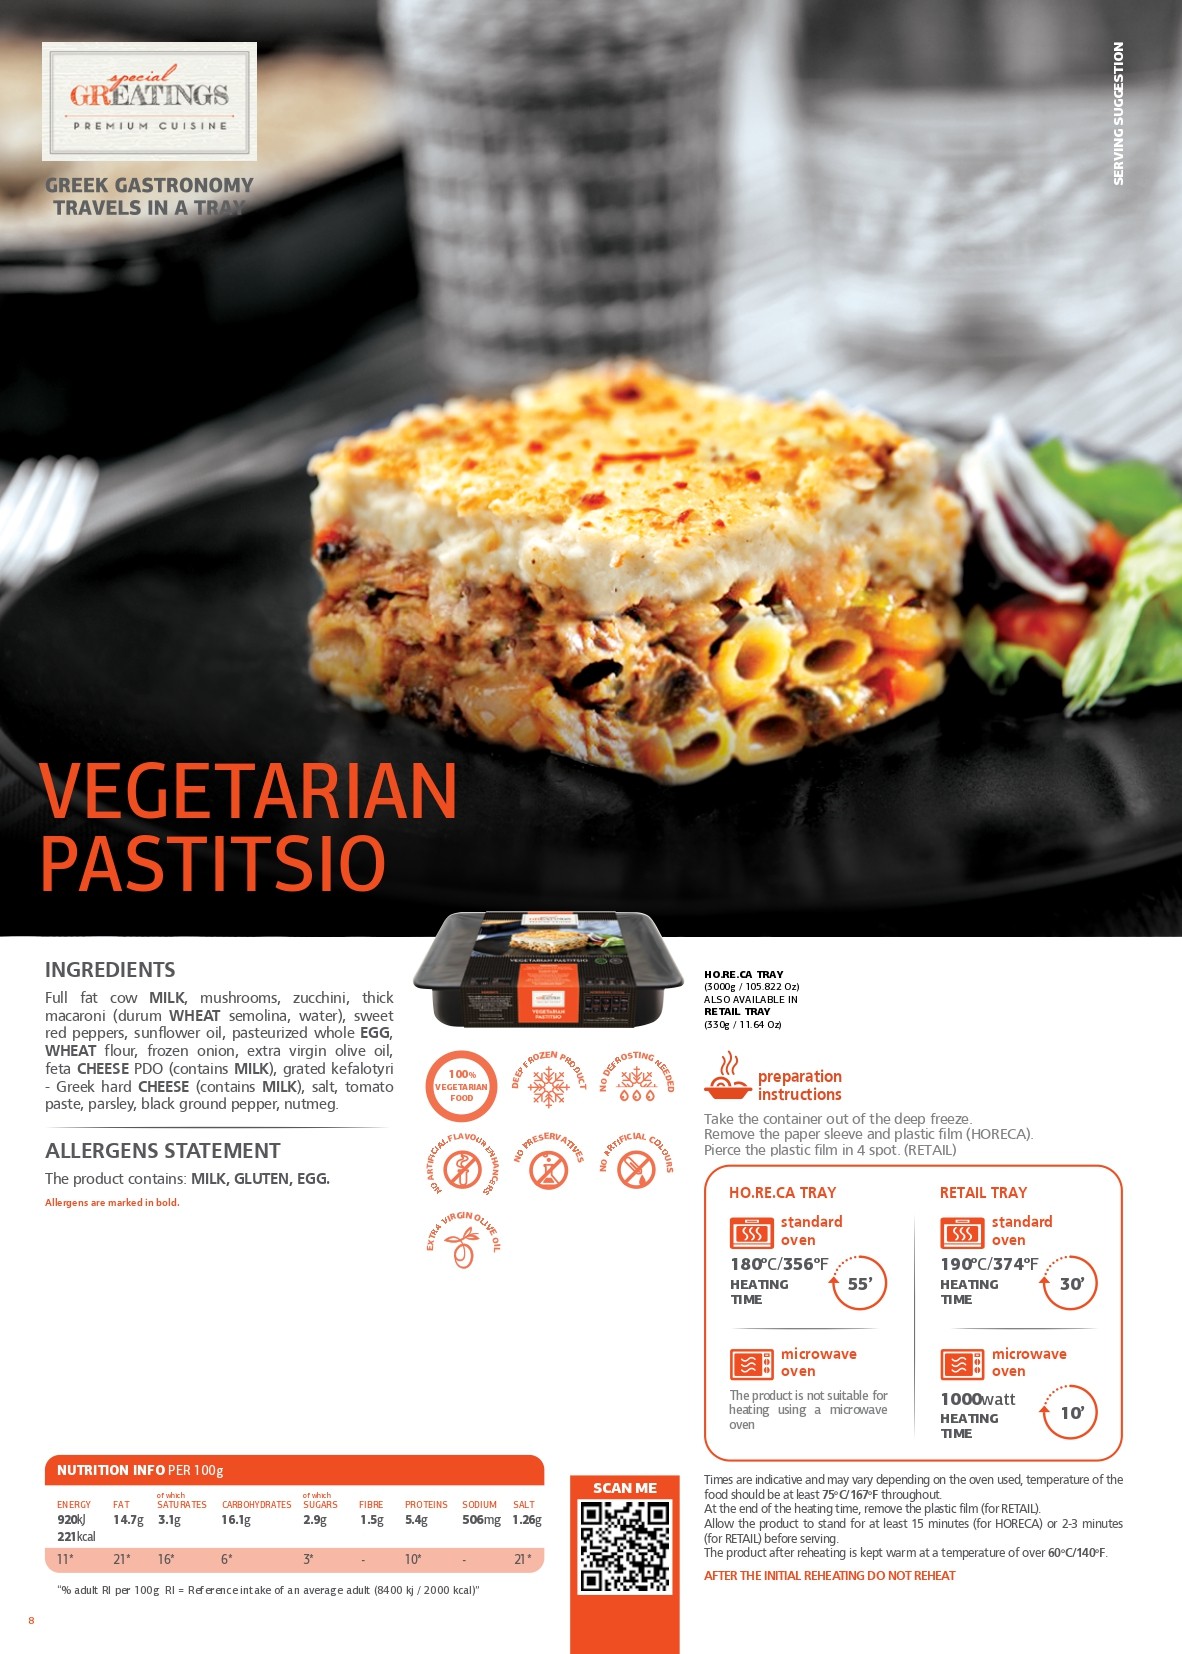 Vegetarian Pastitsio pdf image